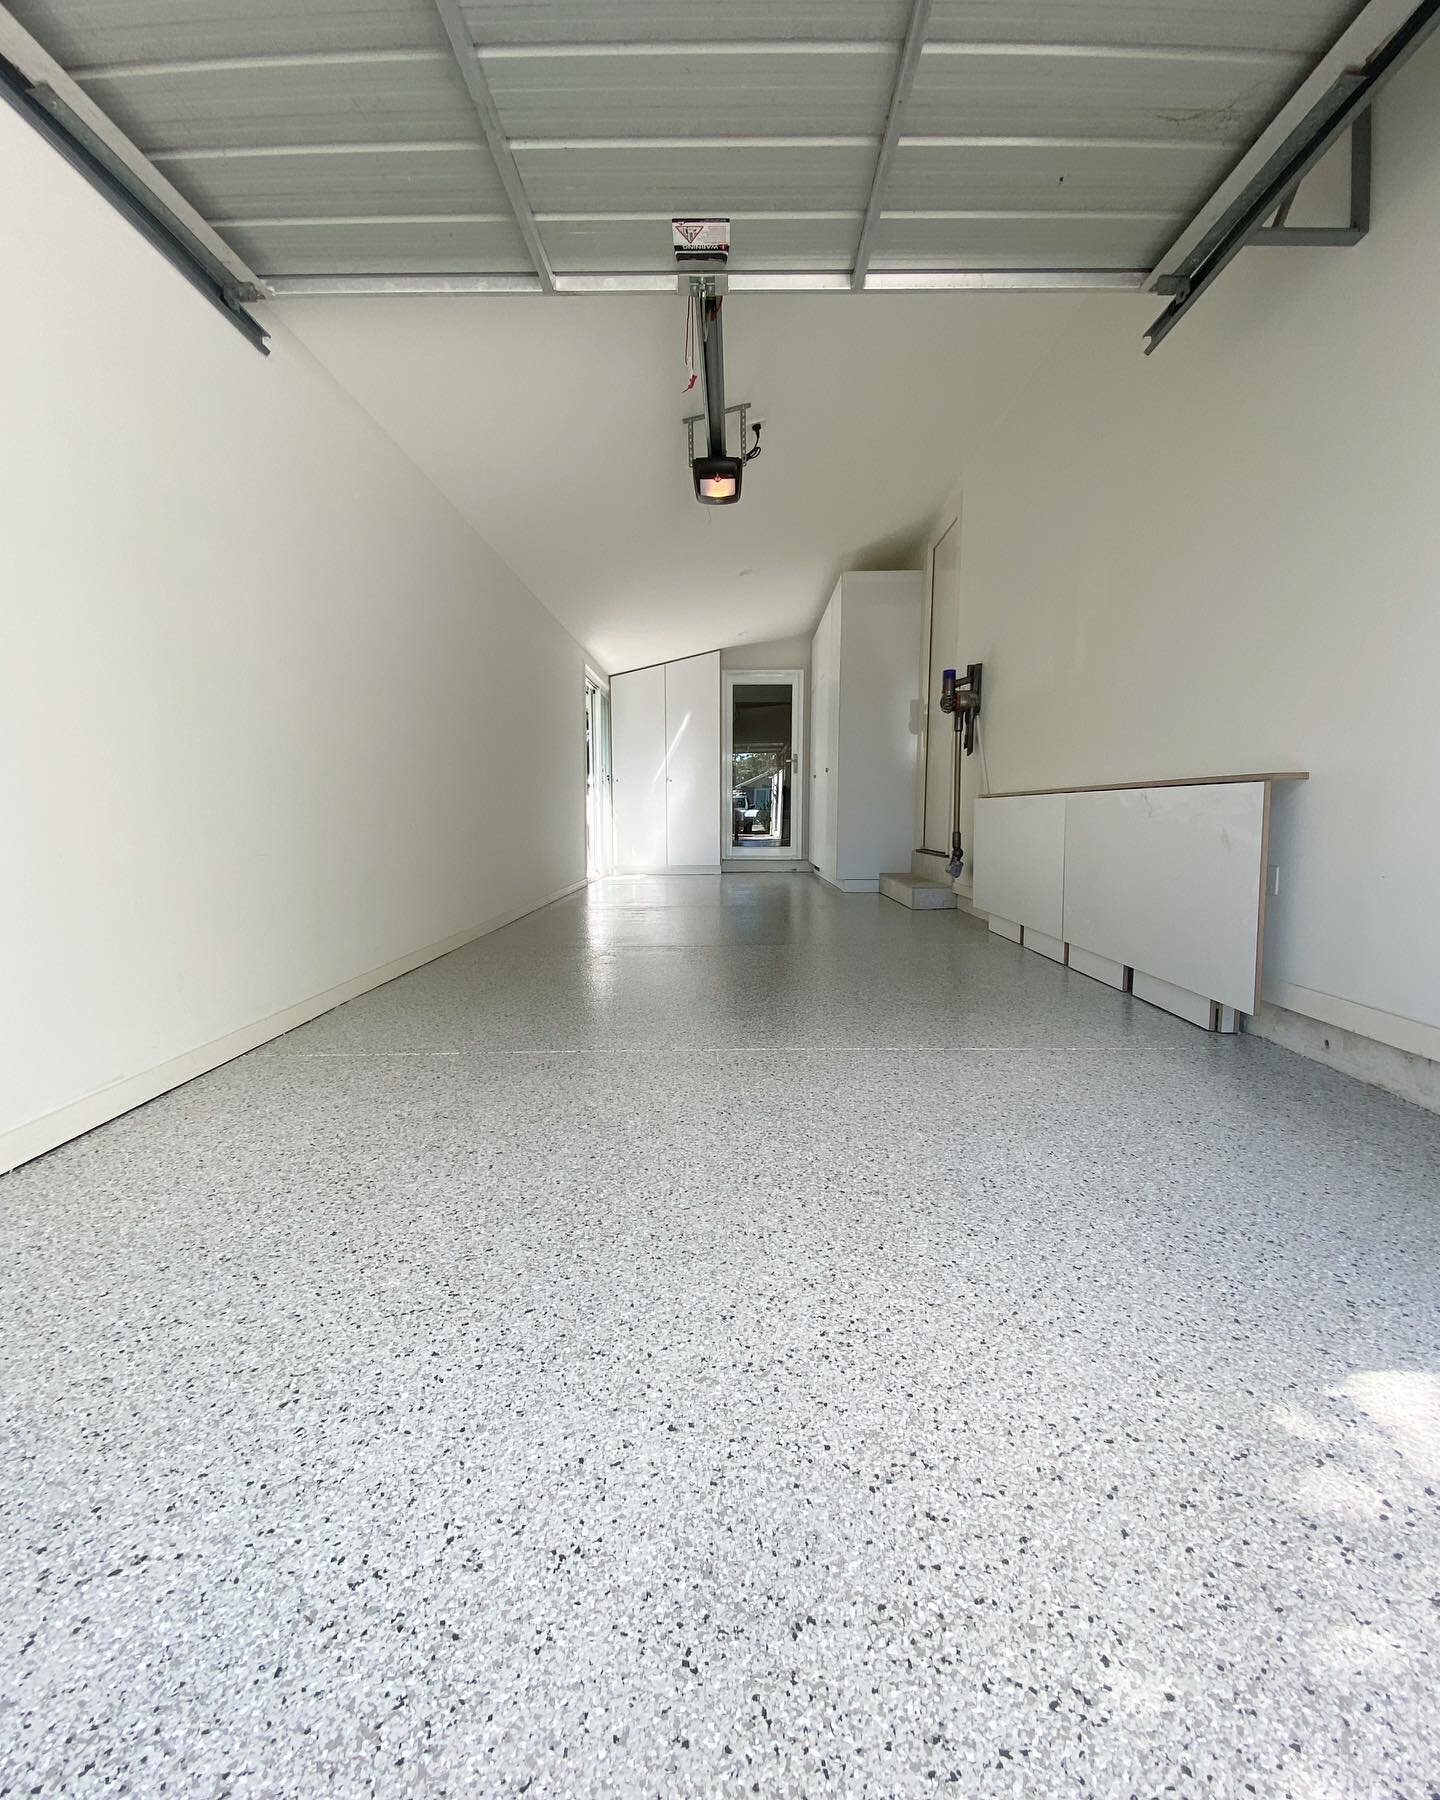 @duluxavista Epoxy, flakes and polyurethane ✅
Best option for your garage floor 👌🏻